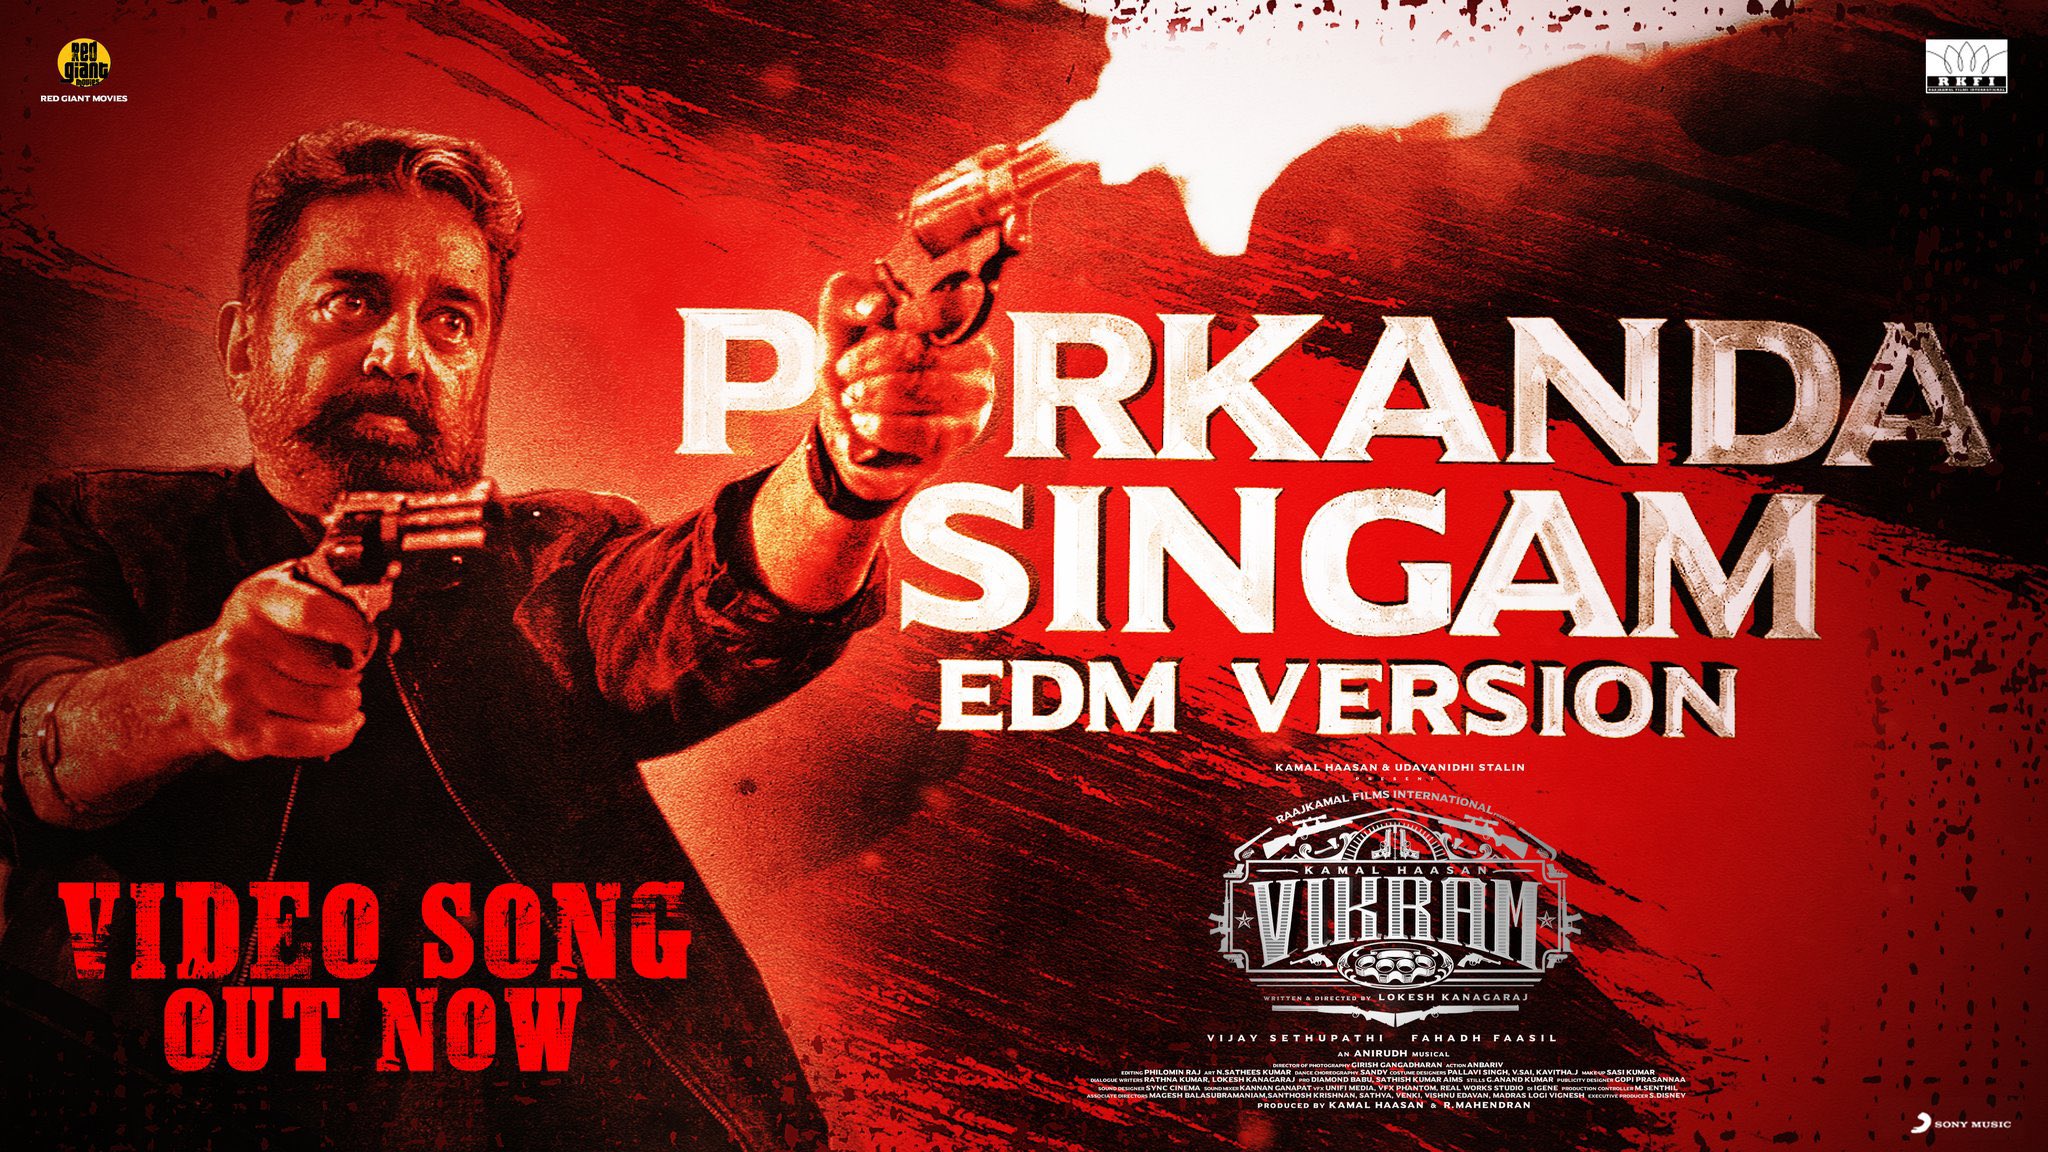 Vikram Porkanda Singam EDM version Video Song out now